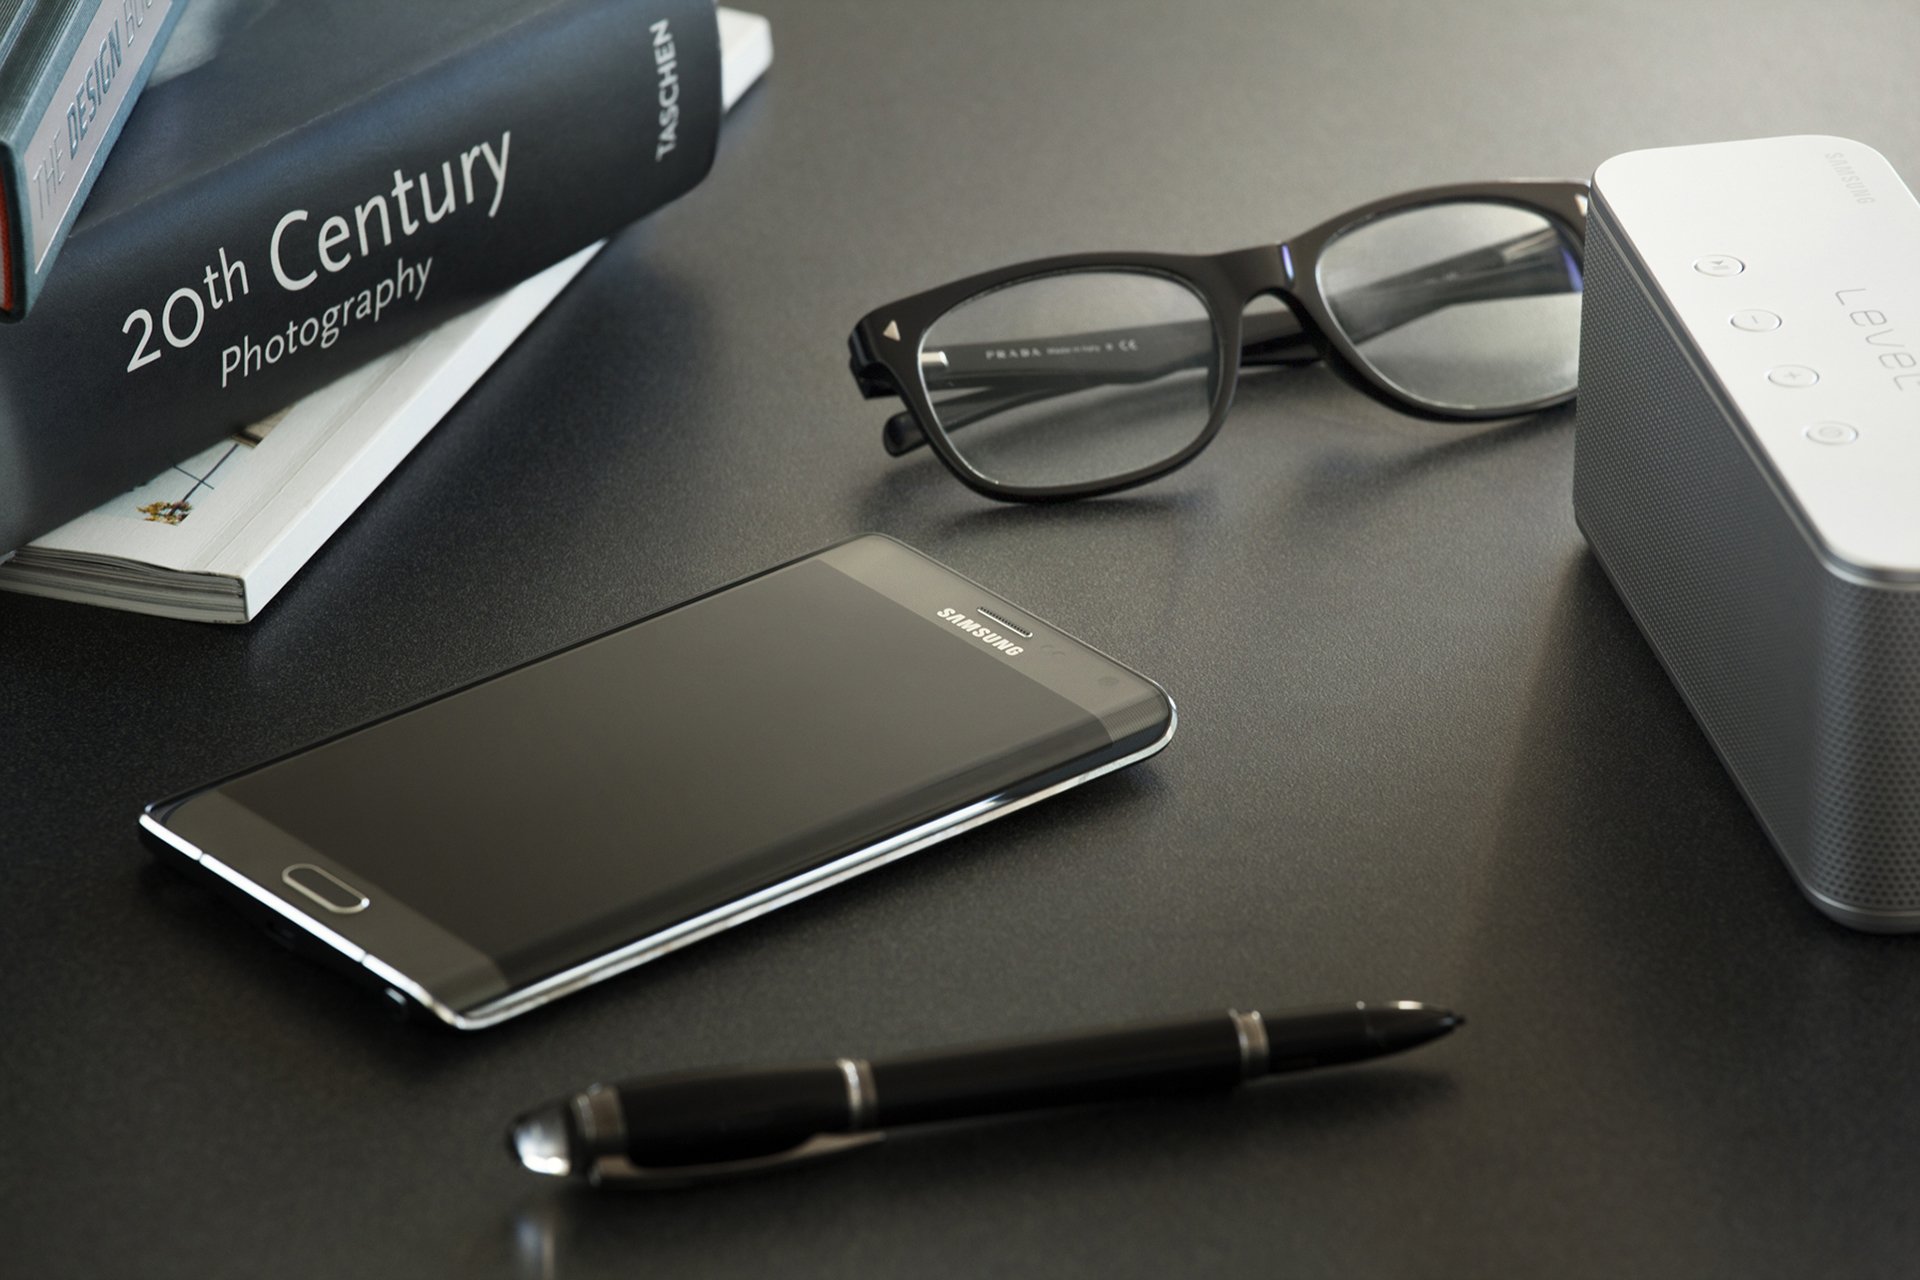 samsung галактика s6 край android смартфон 2015 г. ручка книги очки